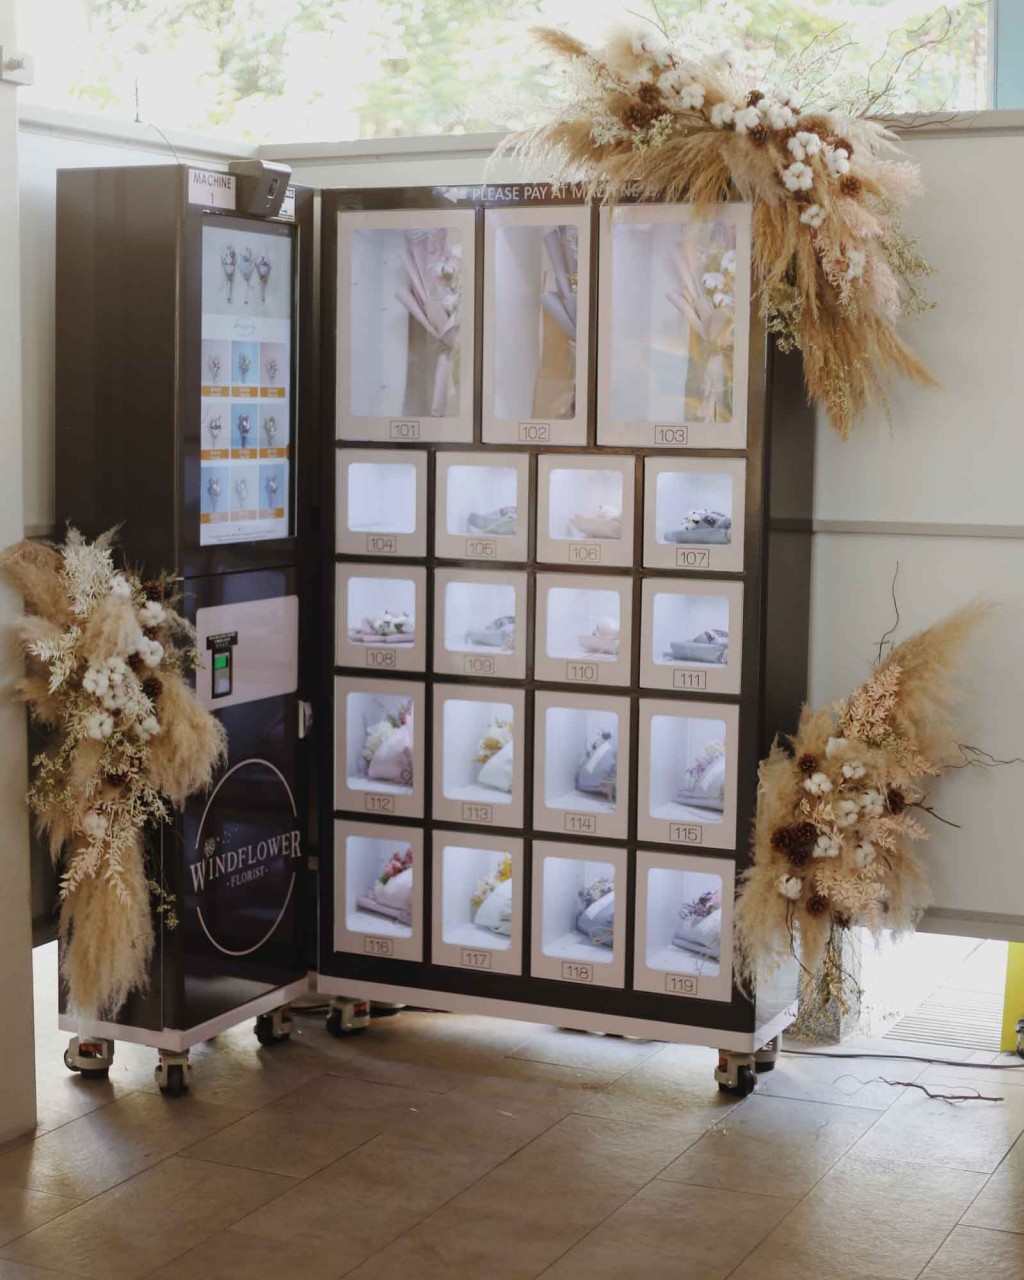 Windflower Florist - vending machine